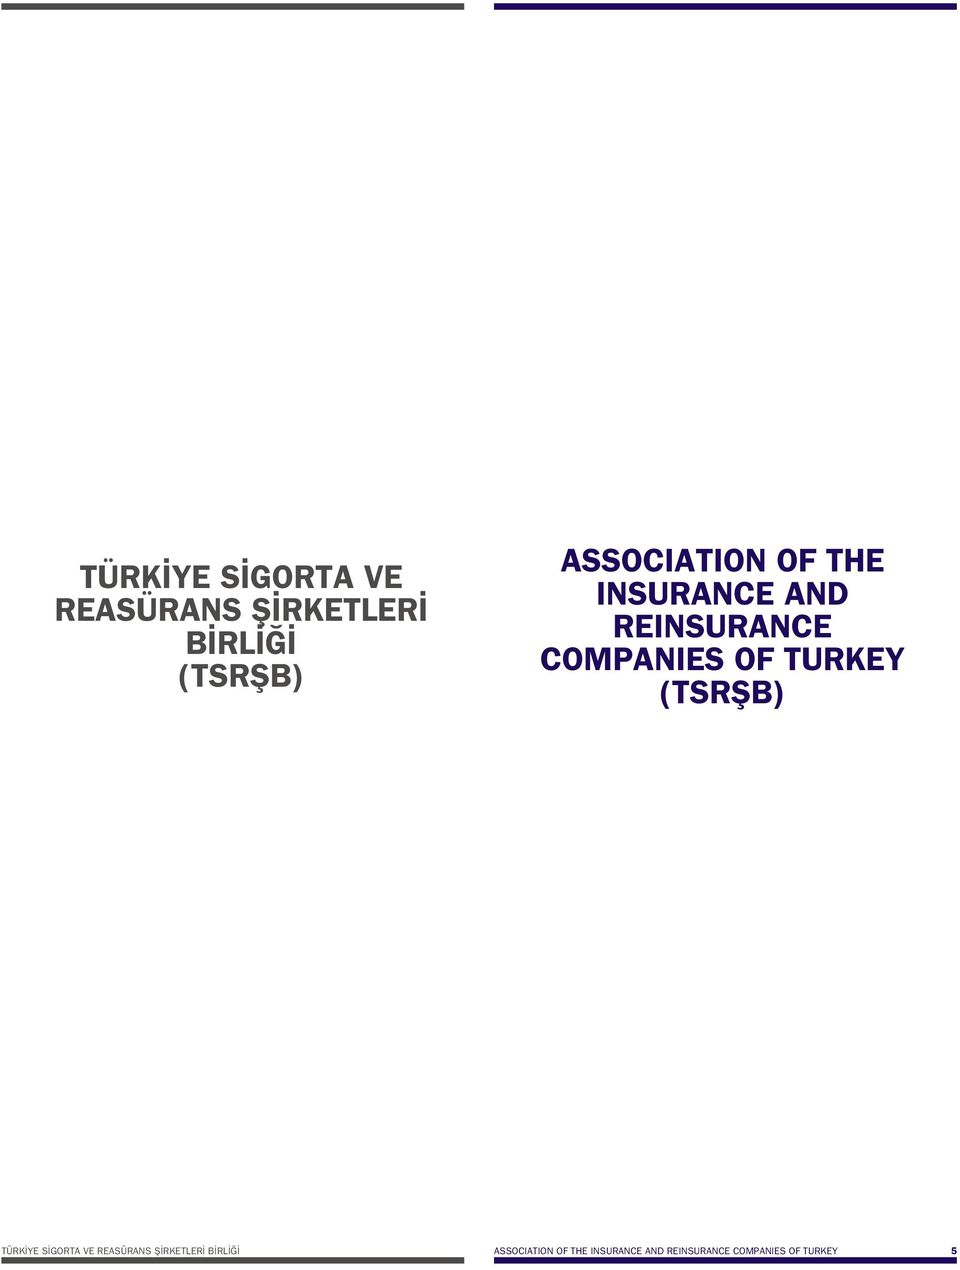 AND REINSURANCE COMPANIES OF TURKEY